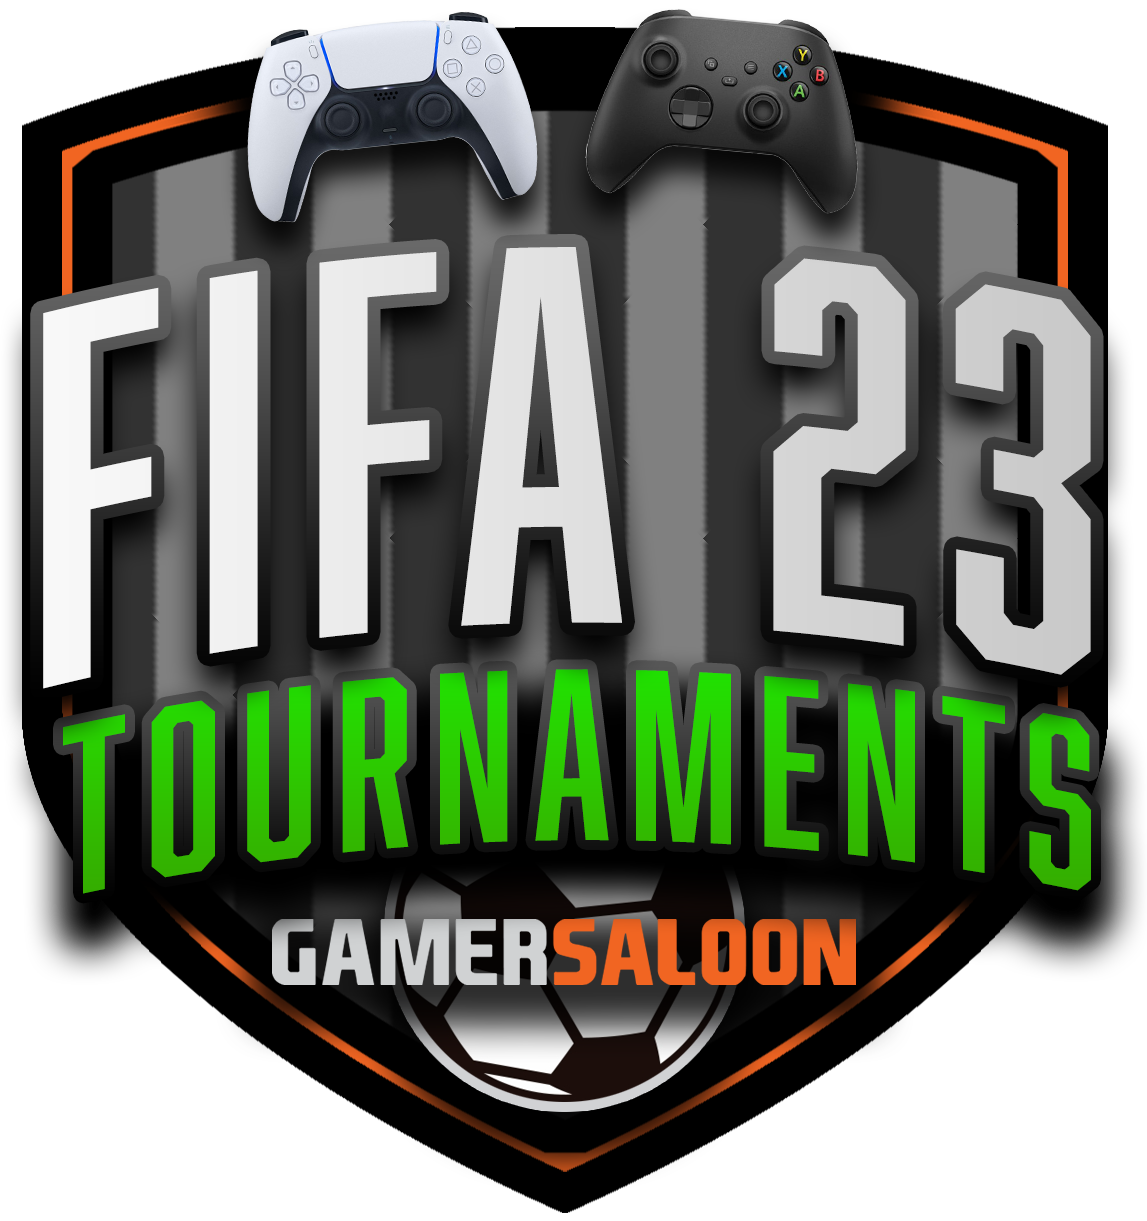 FIFA 23 Tournaments